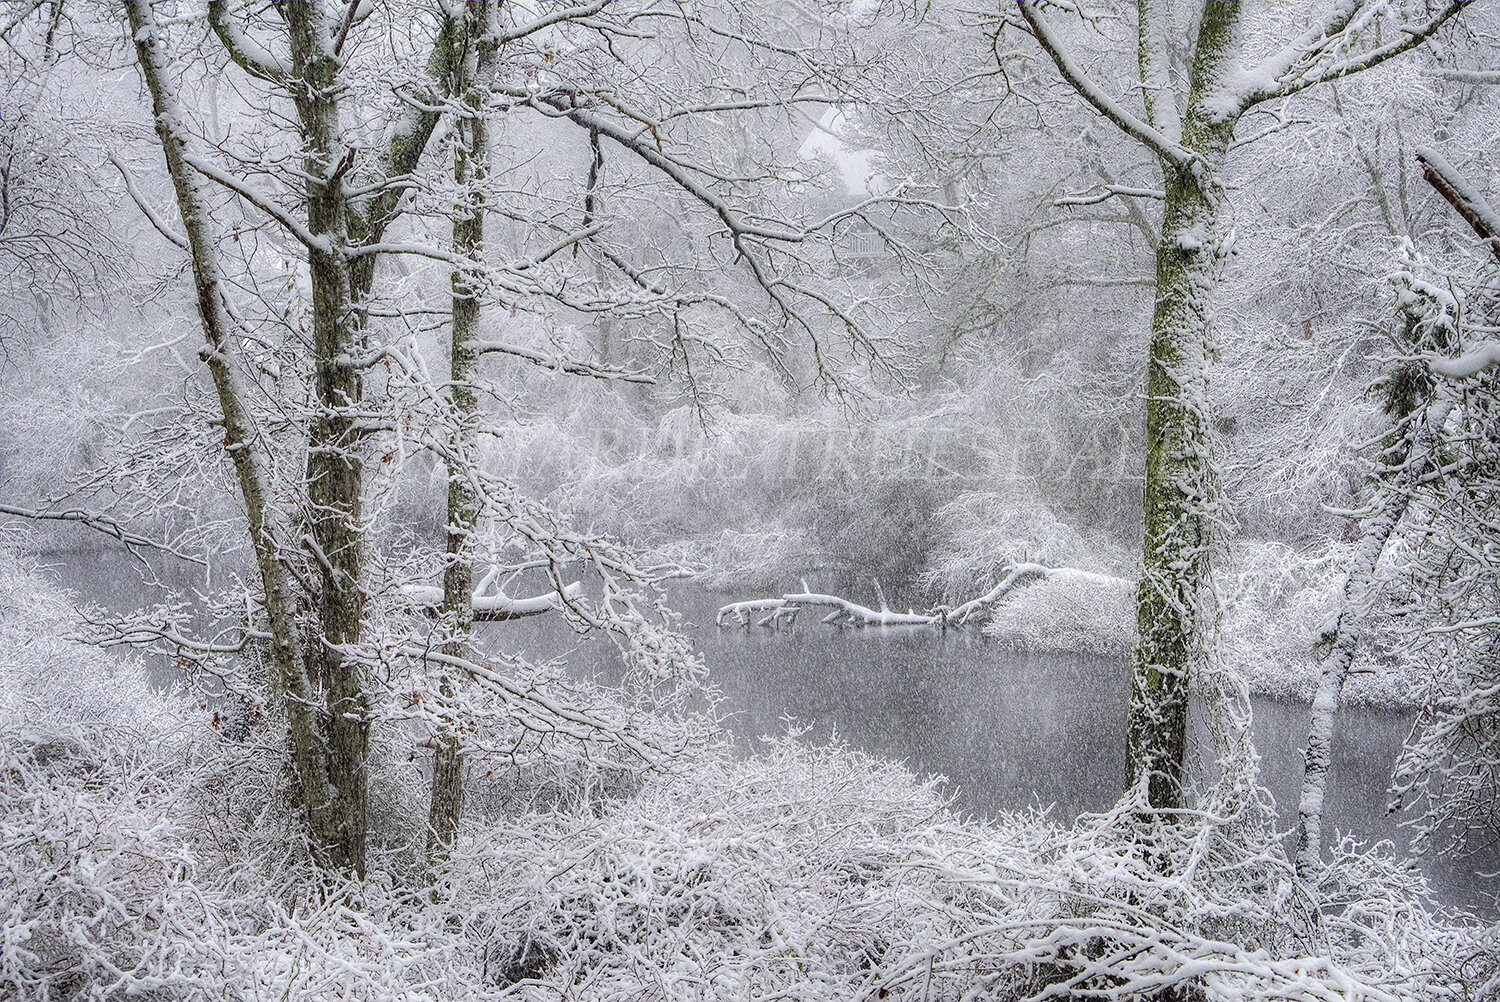 CC#157 Blizzard, Reuben's Pond Preserve